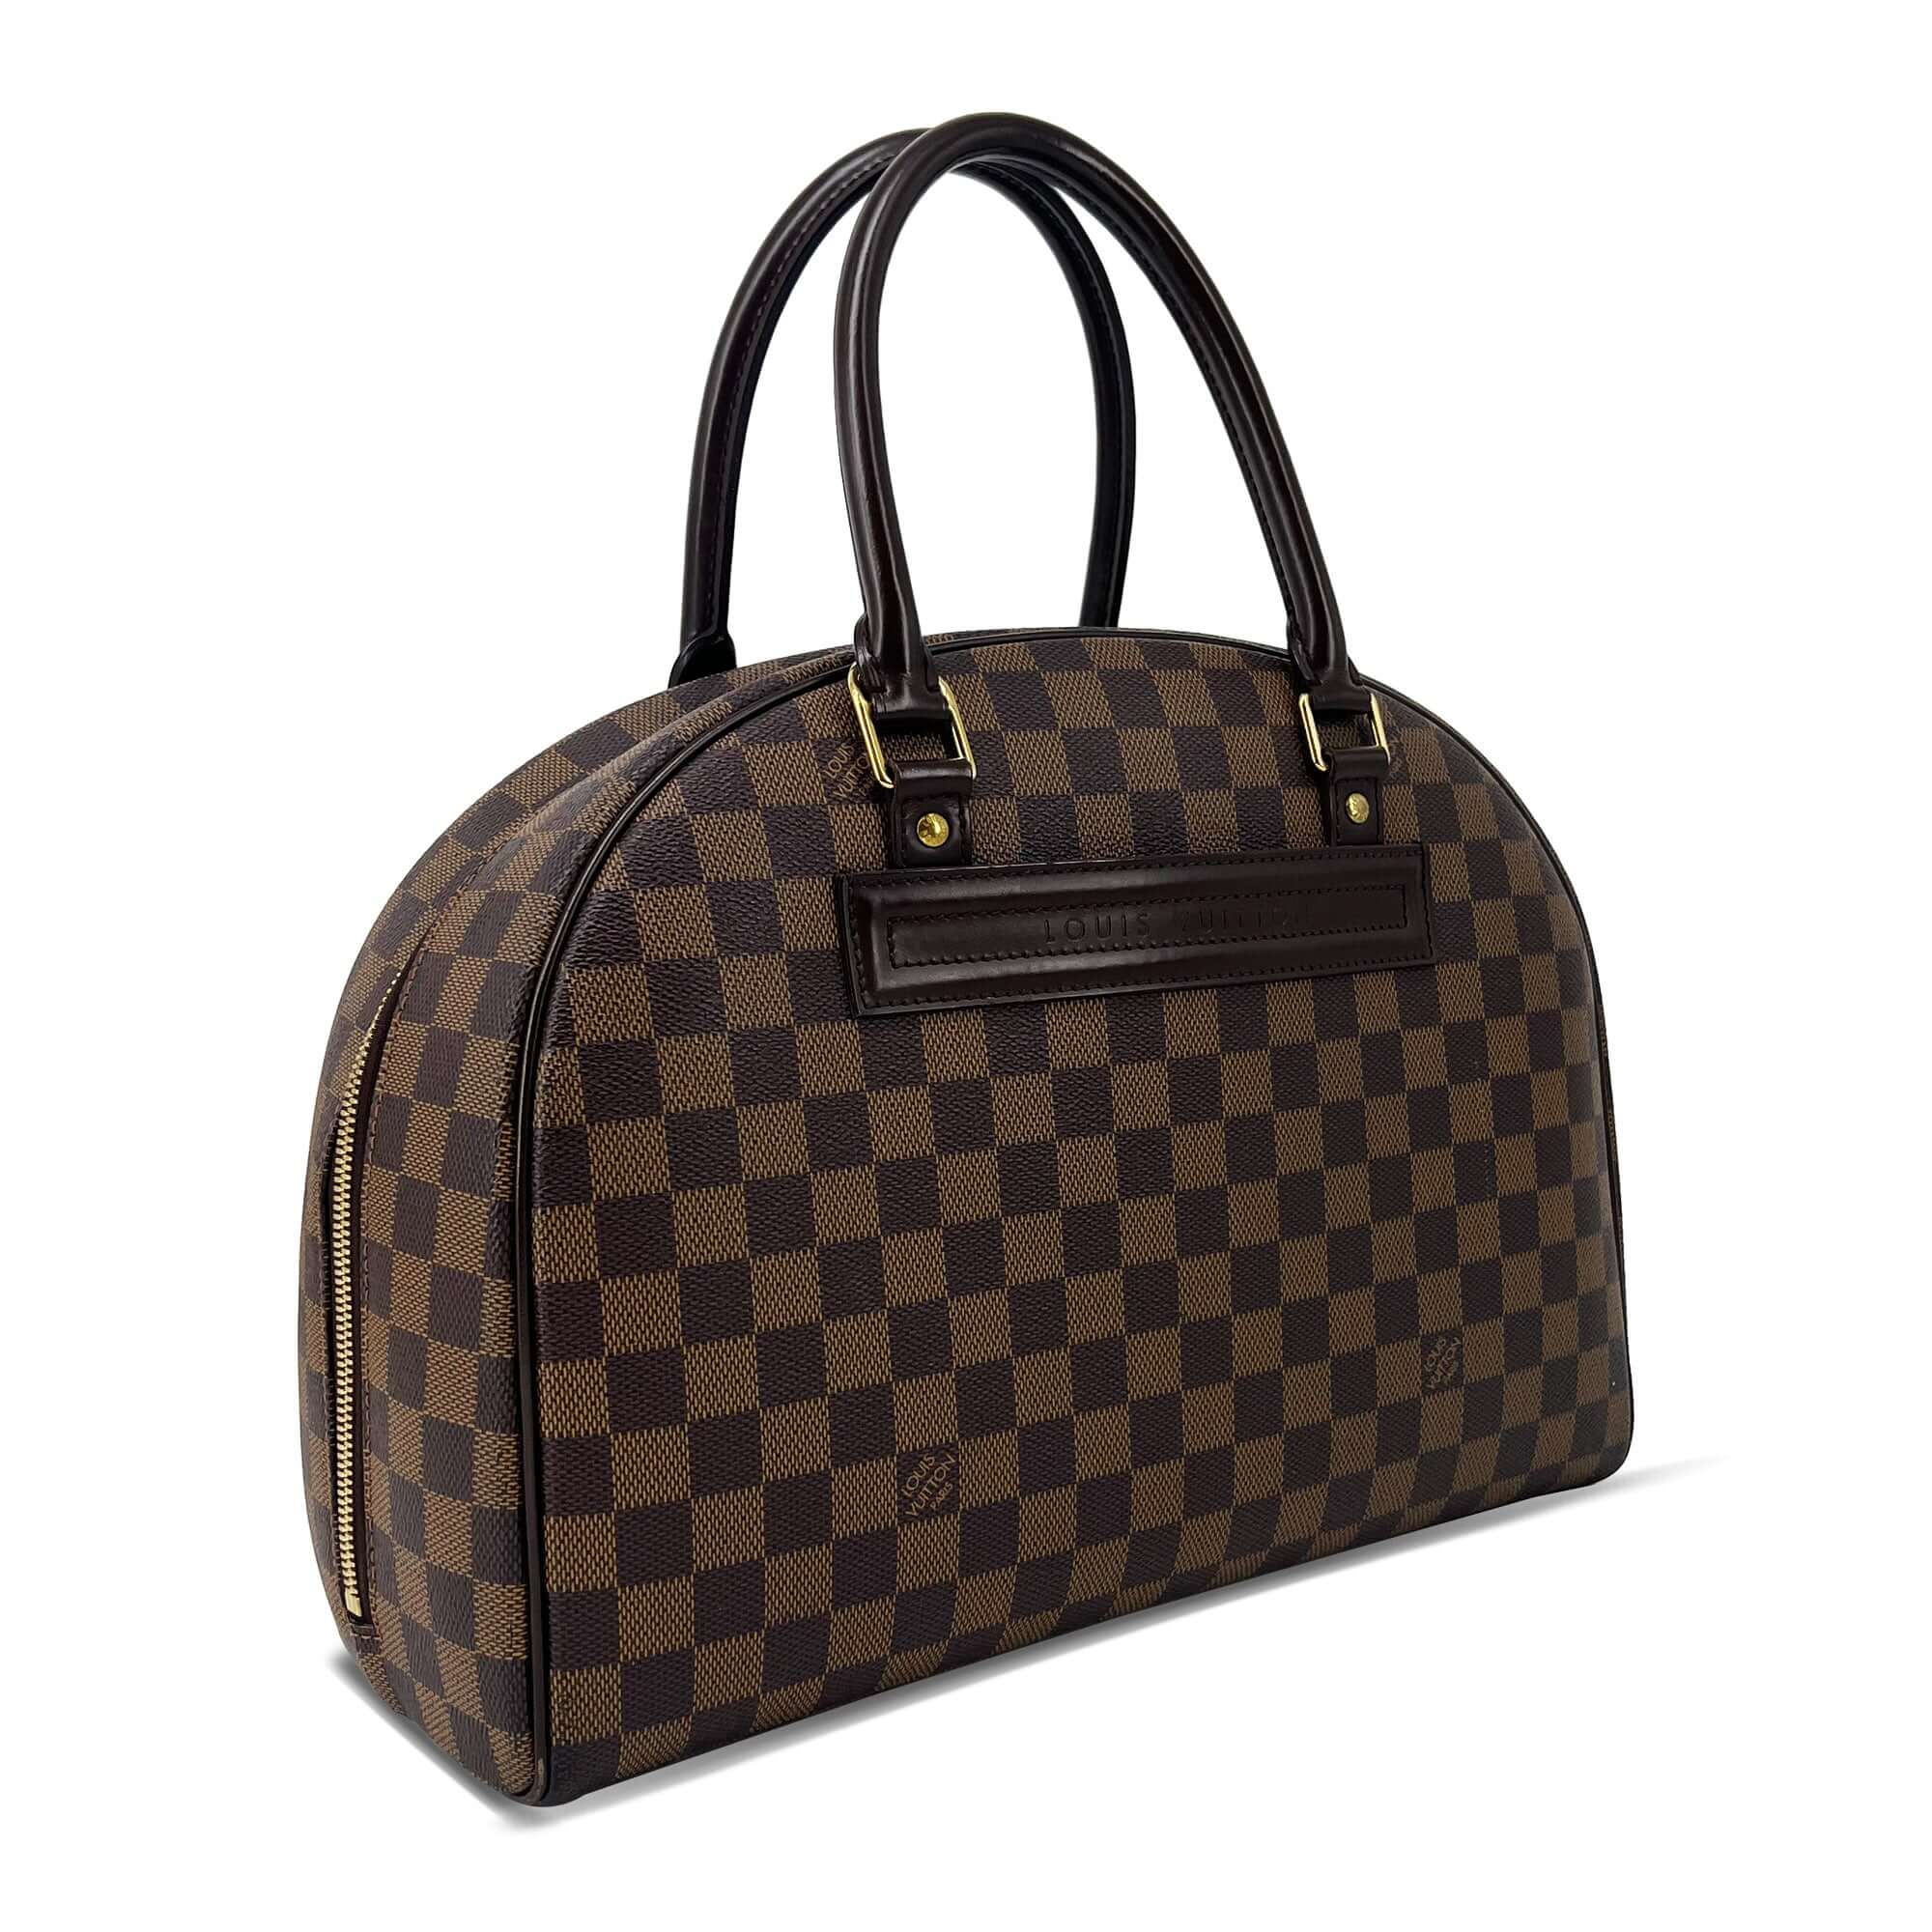 Louis Vuitton Damier Ebene Nolita handbag